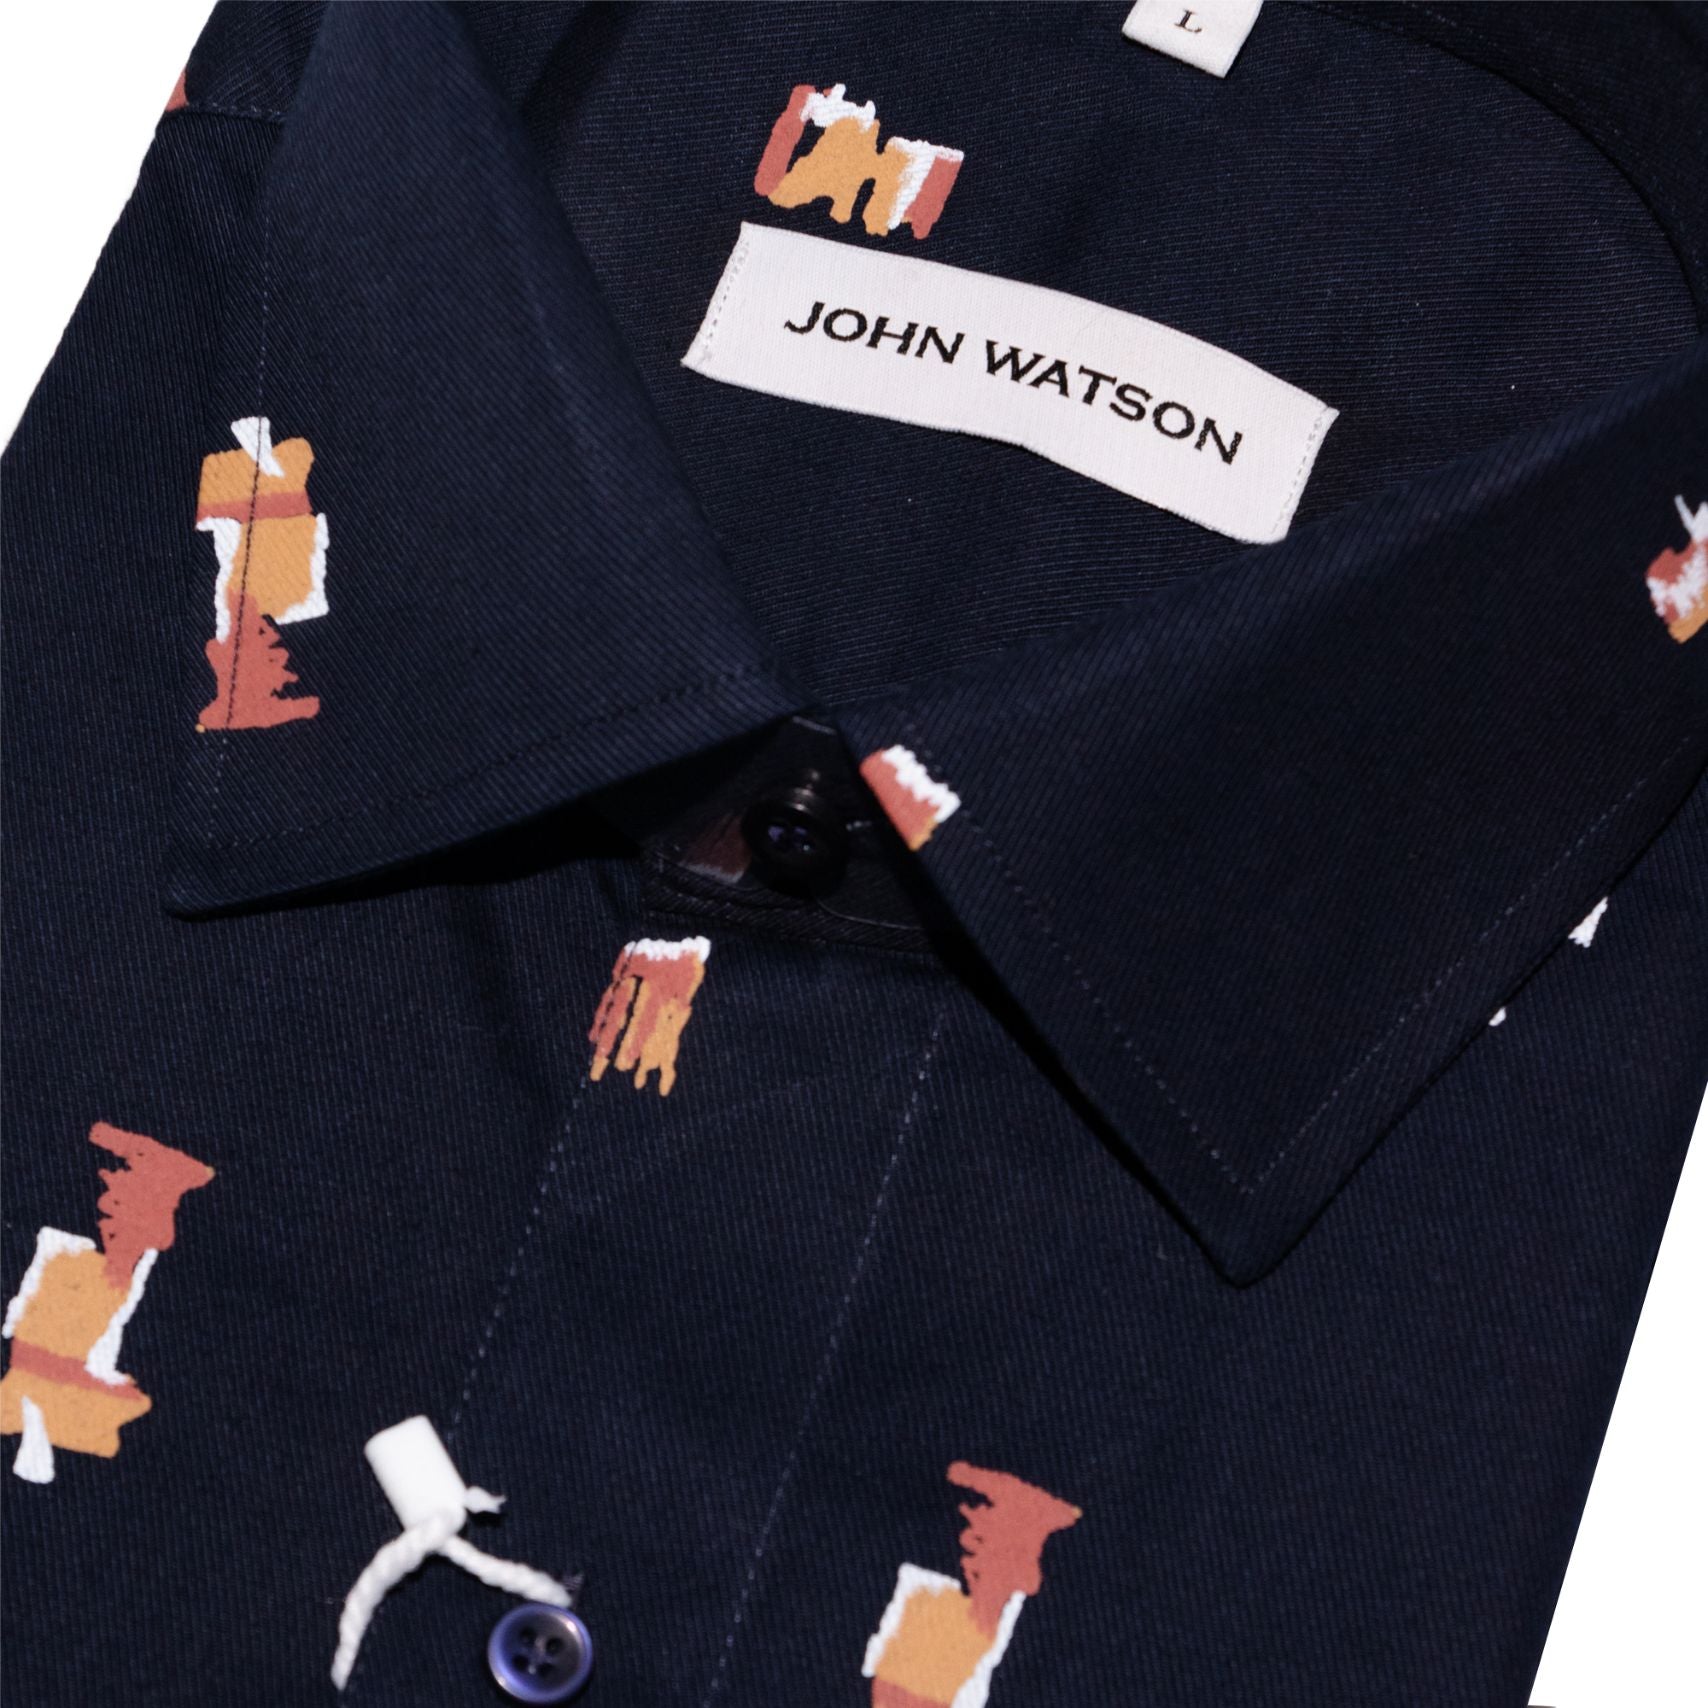 Honduran - Printed Twill Shirt - Black - John Watson